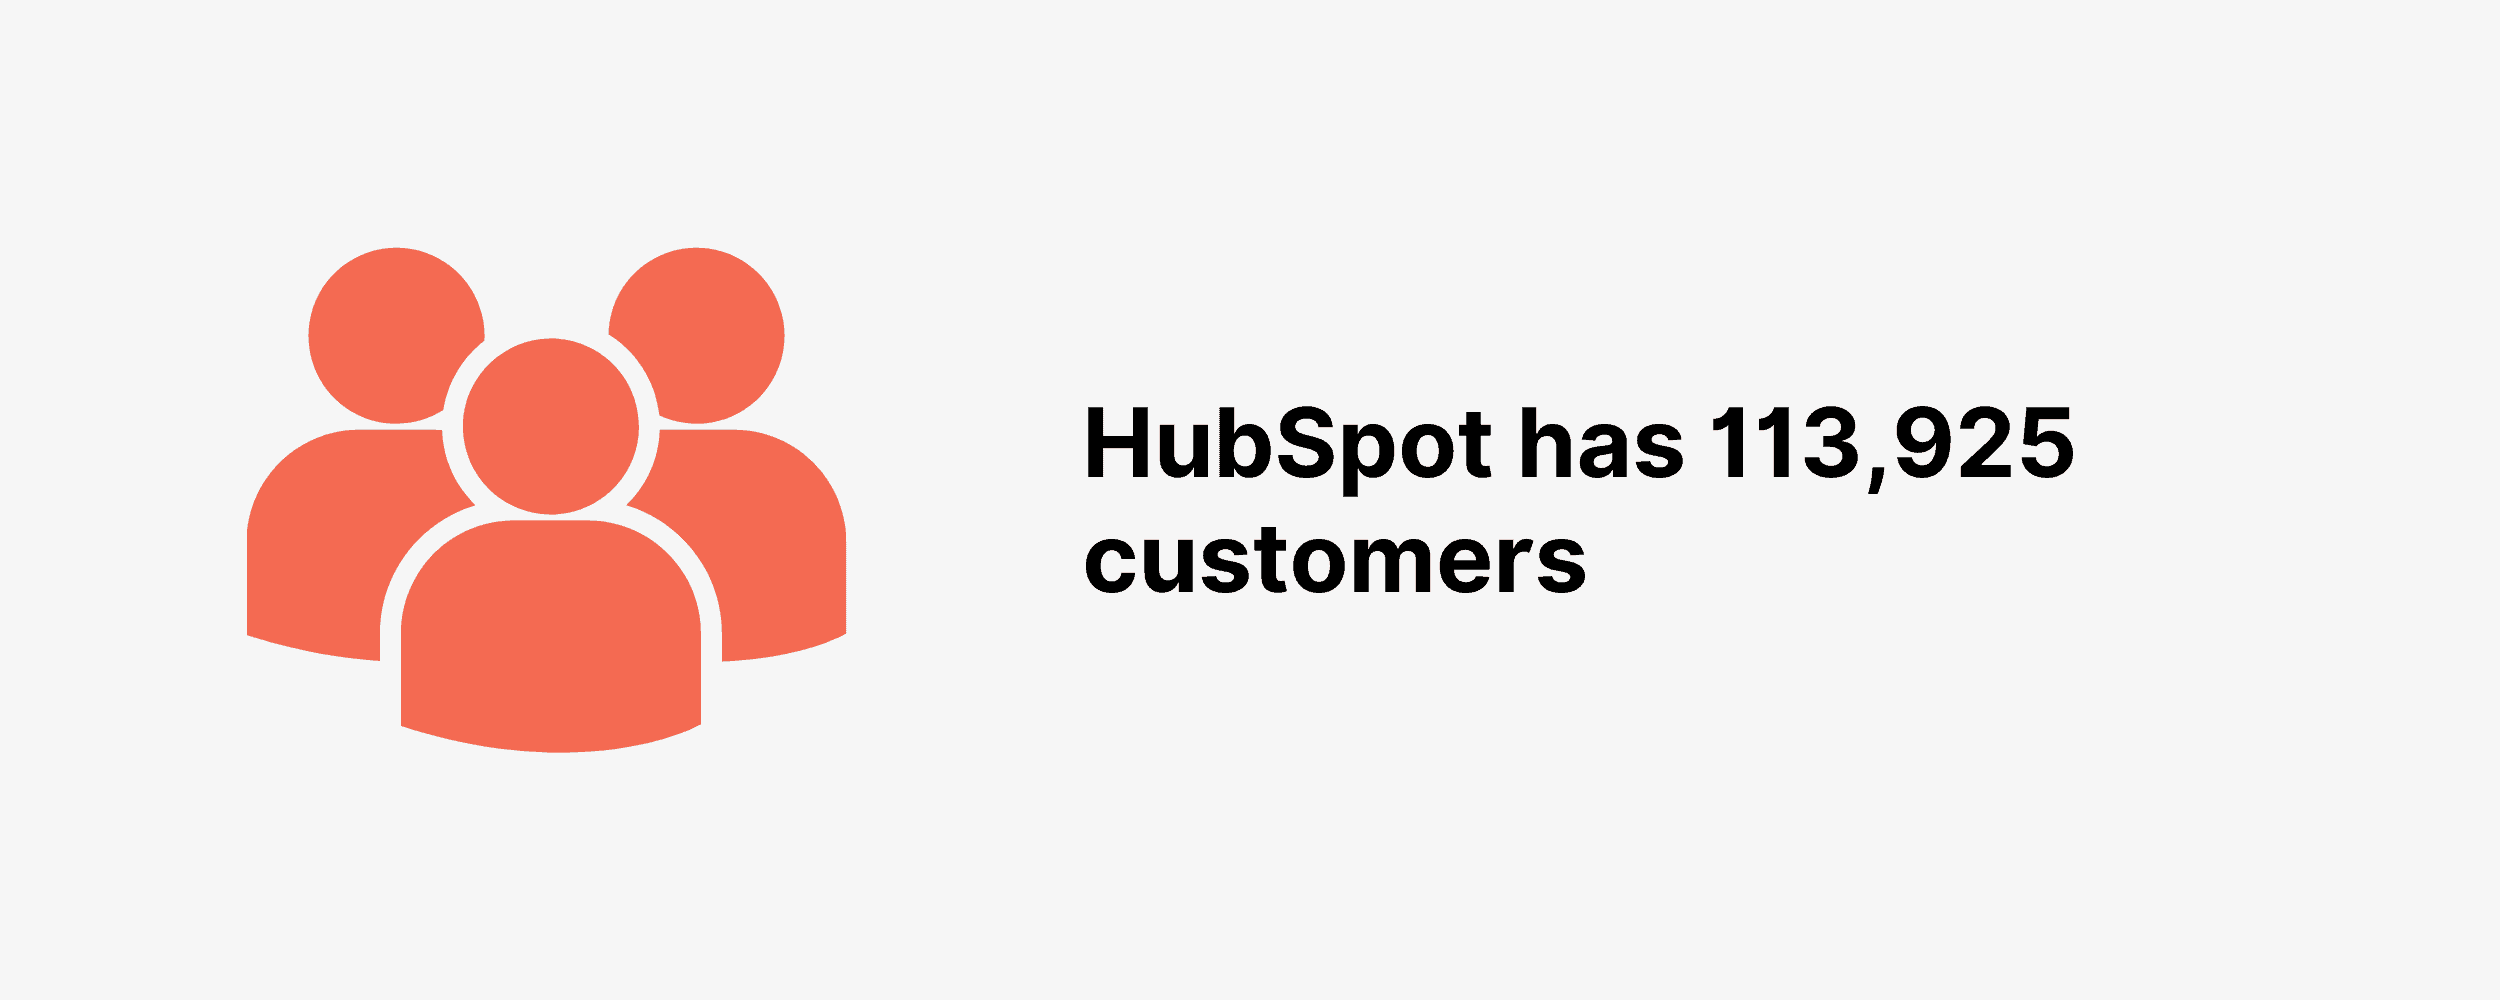 HubSpot has 113,925 customers